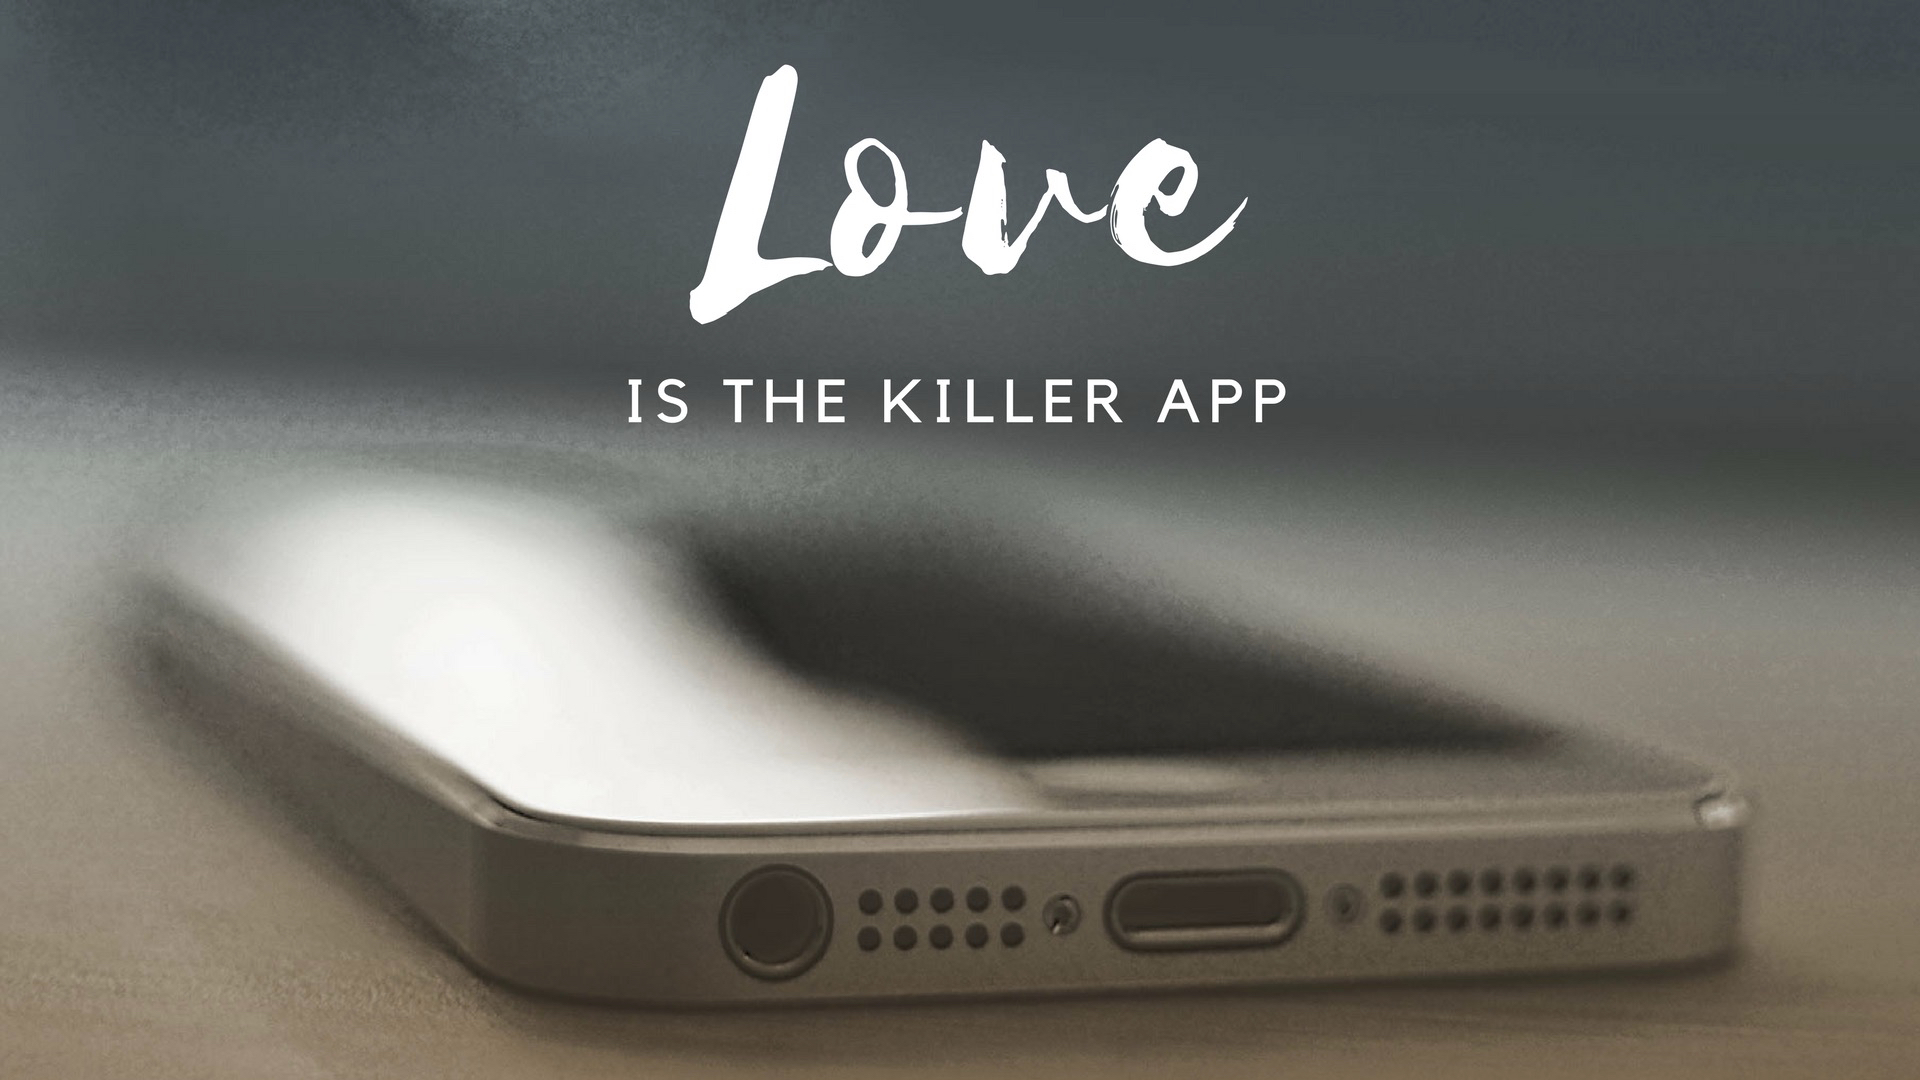 Love is the Killer App